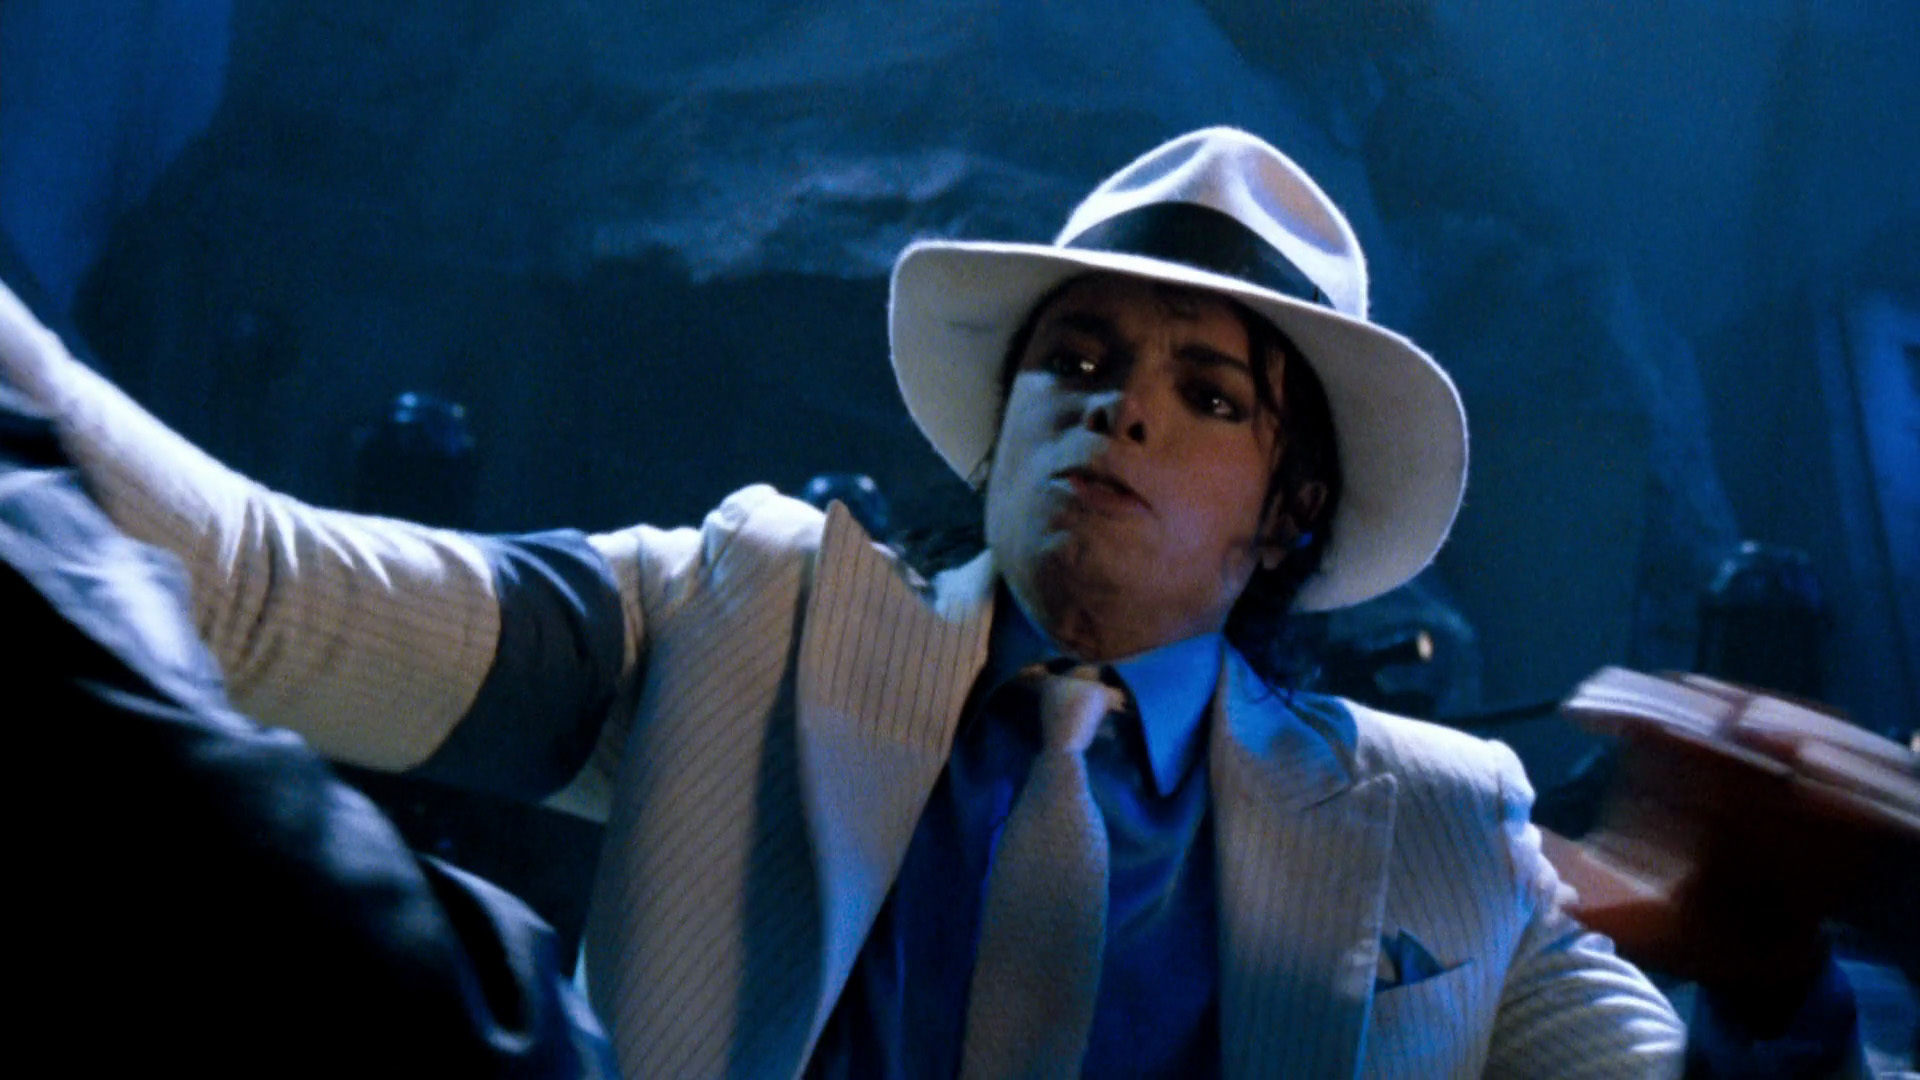 Michael Jackson images I LUV Smooth Criminal CrissloveMJ wallpaper